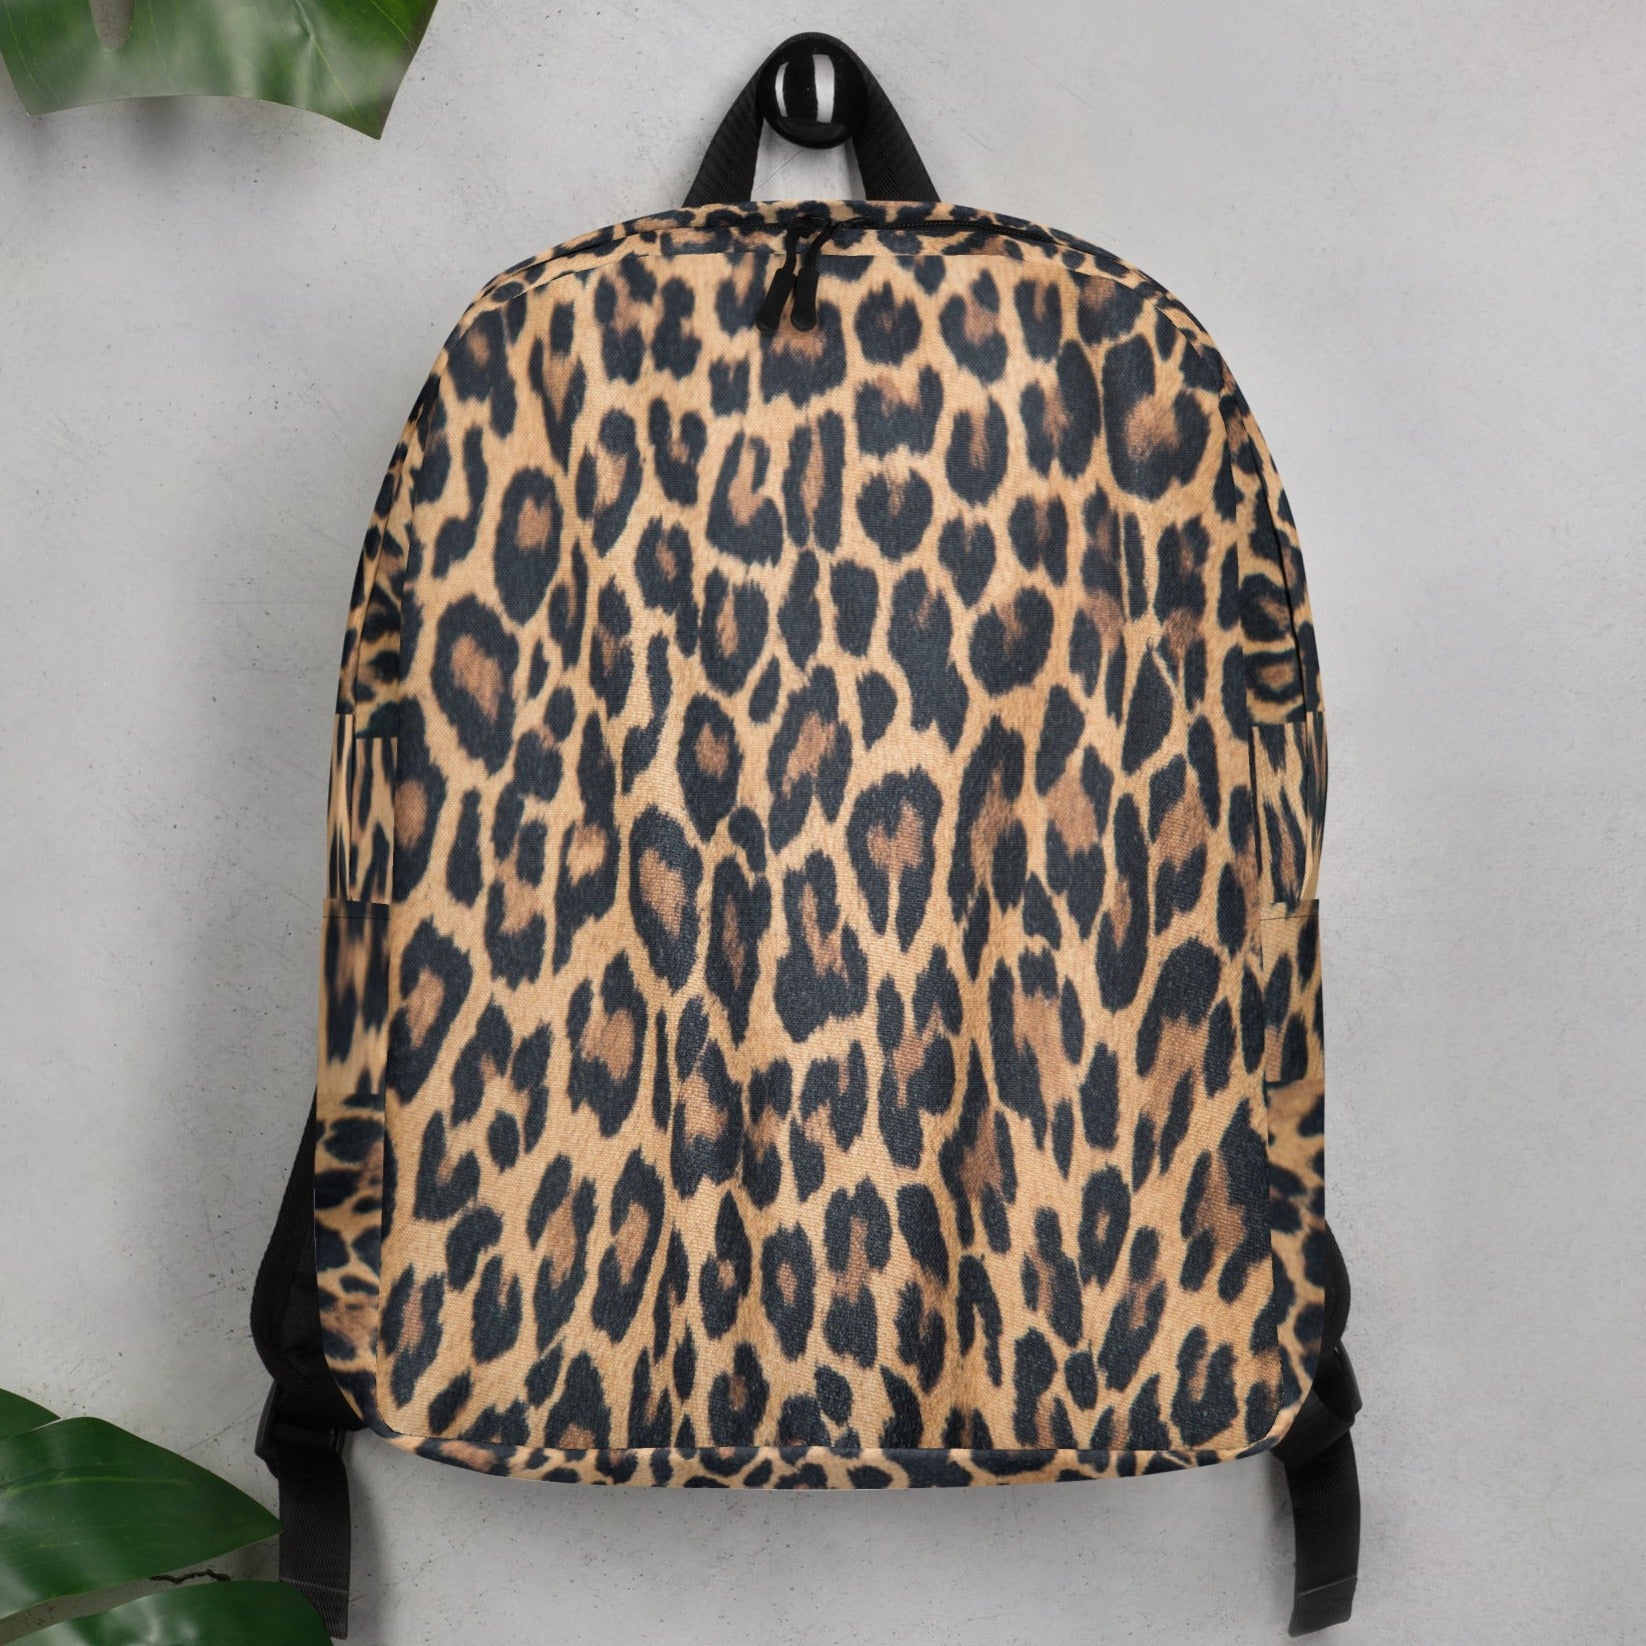 Minimalist Backpack Leopard Print